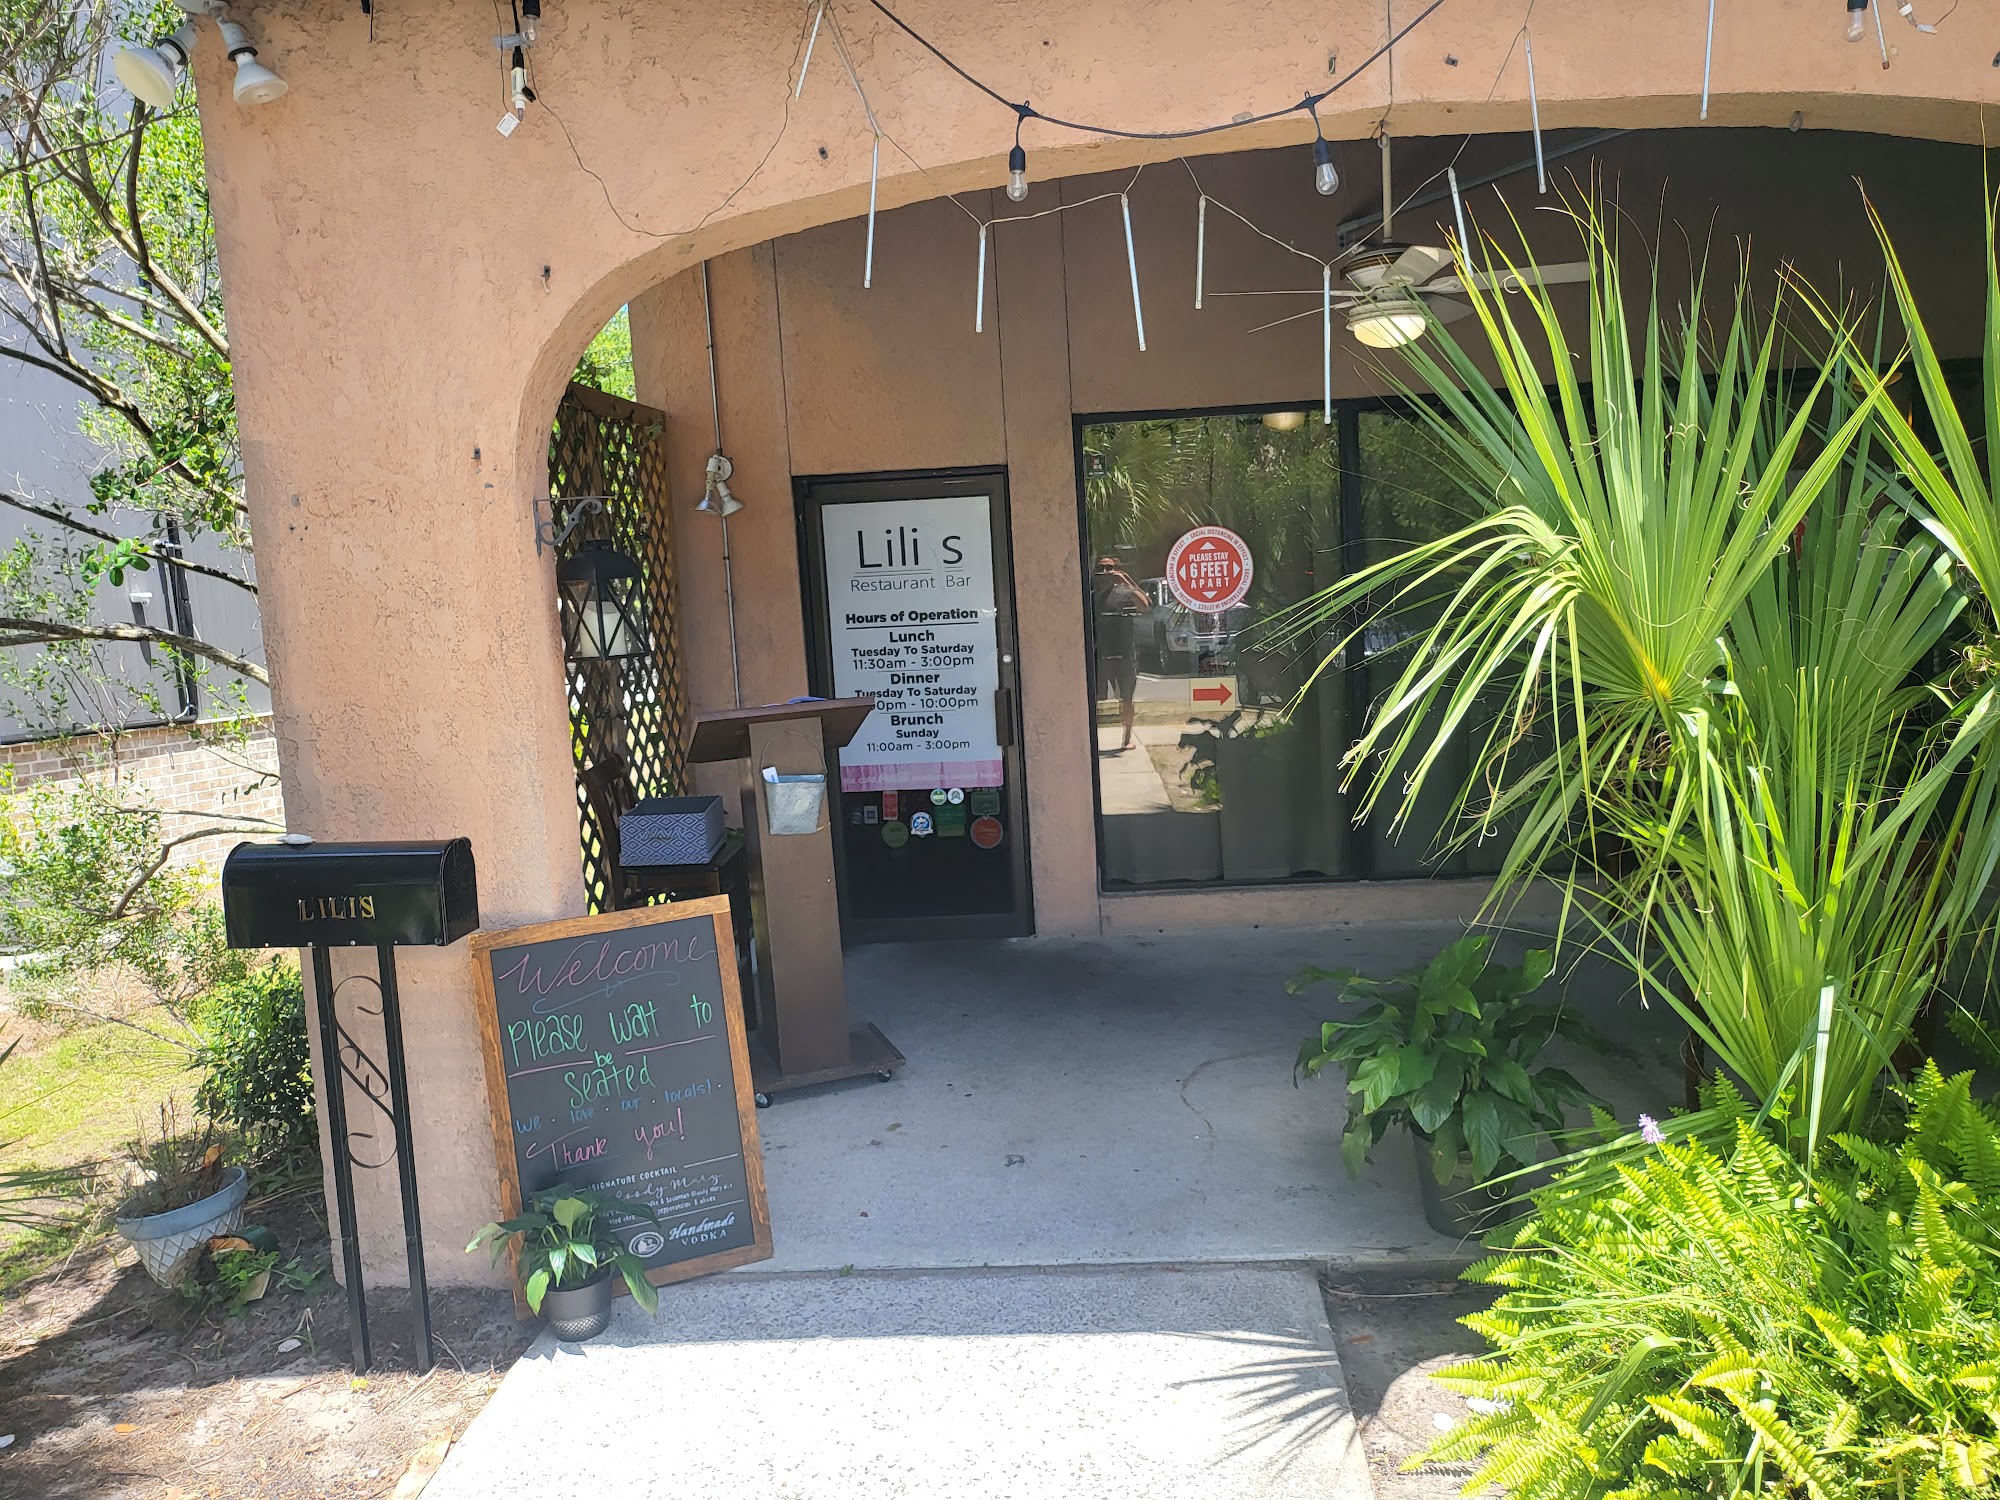 Lili's Restaurant and Bar